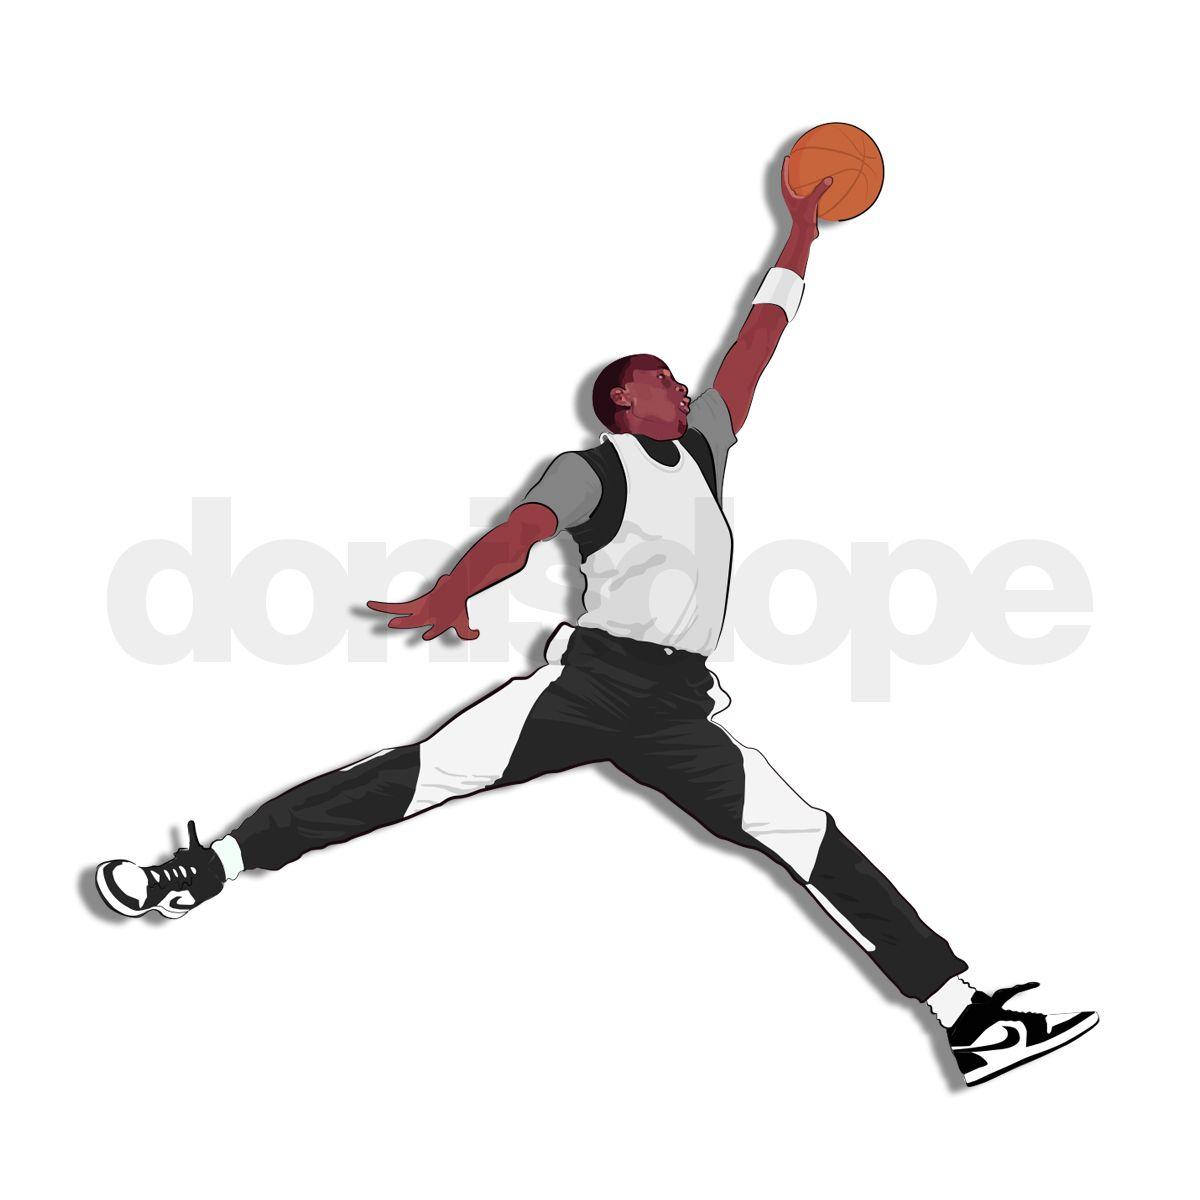 Dope Jordan Logo - The Jumpman Revisited.